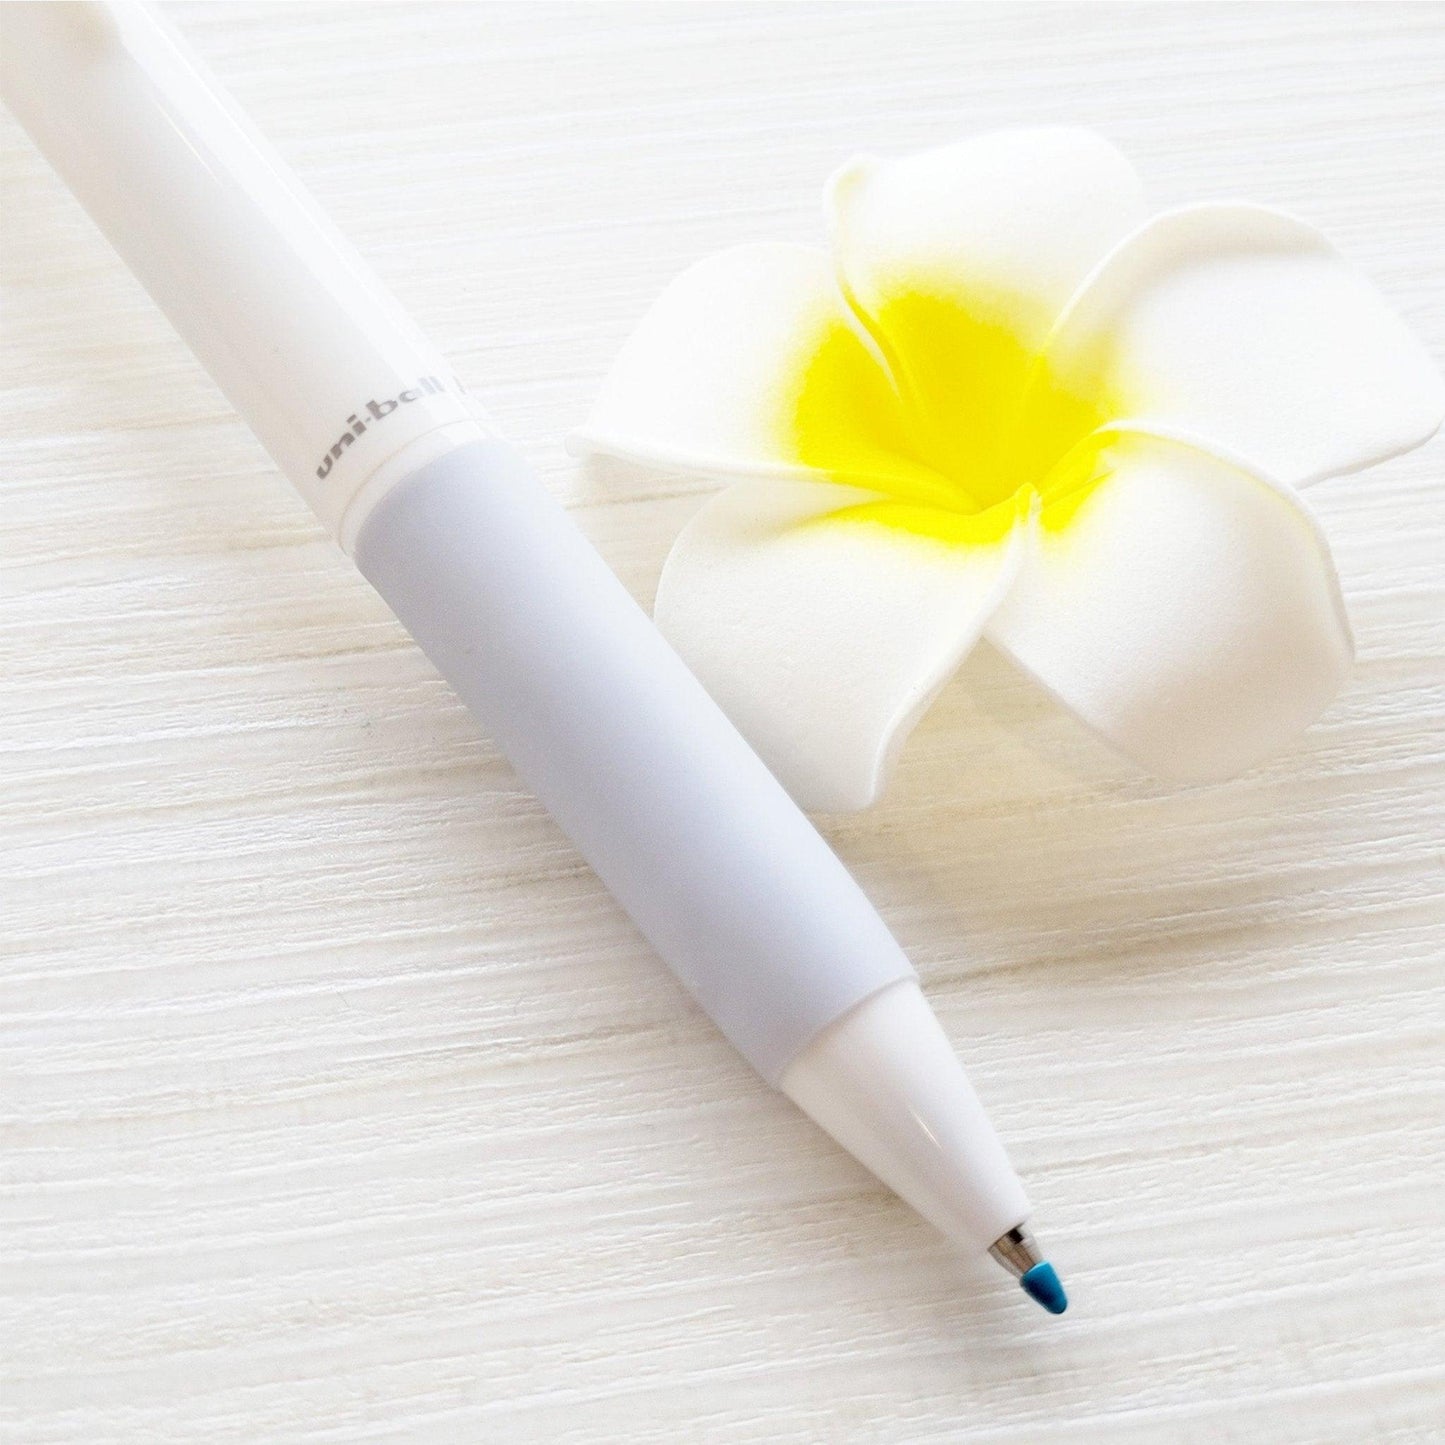 Uni URN-180-05N.1 uni-ball RE 0.5MM Erasable Gel Pen Magic Erase Pen Erase Pen White Pen - CHL-STORE 